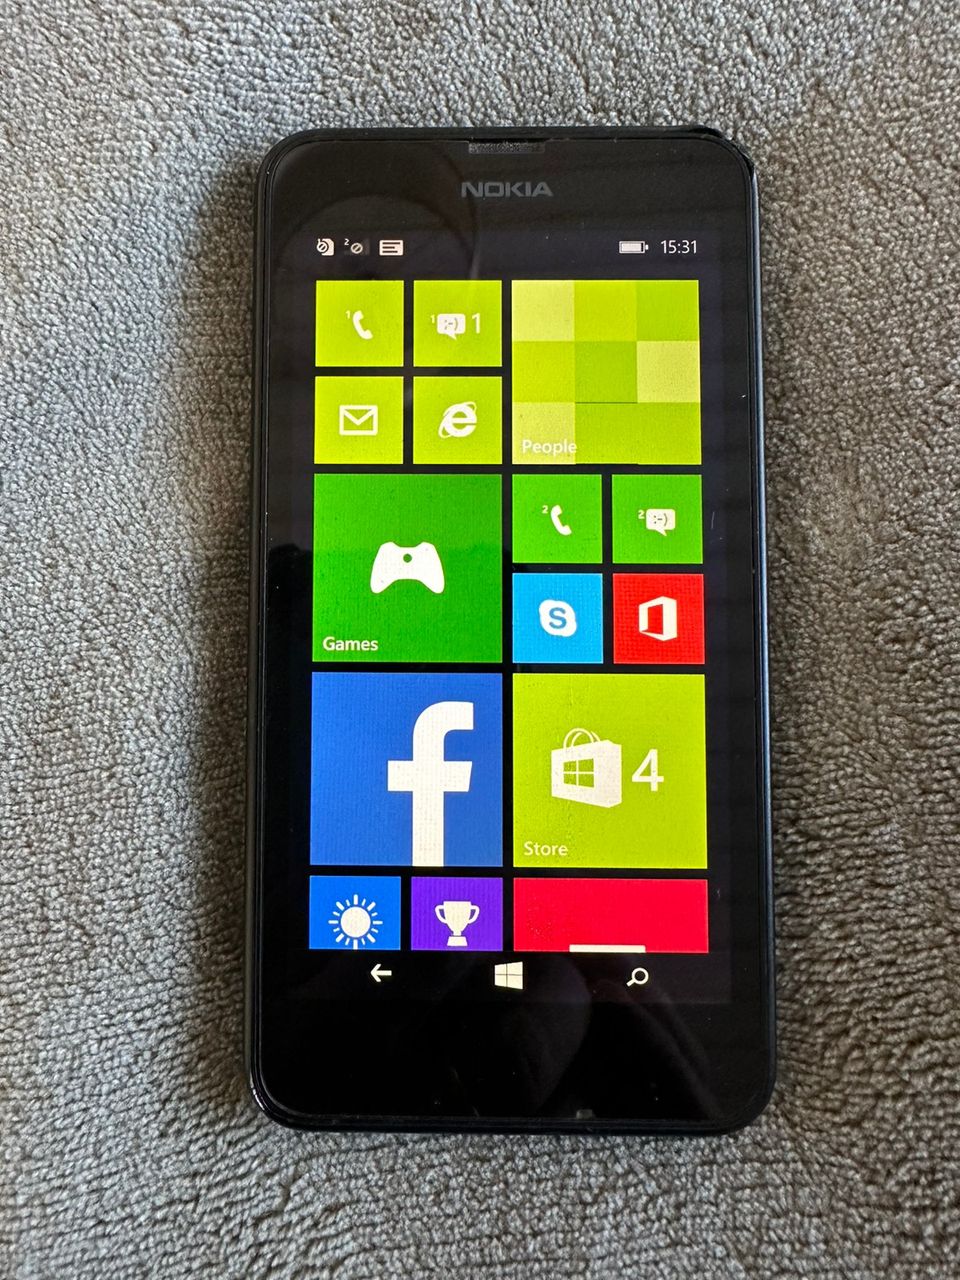 Nokia Lumia 630 dual SIM